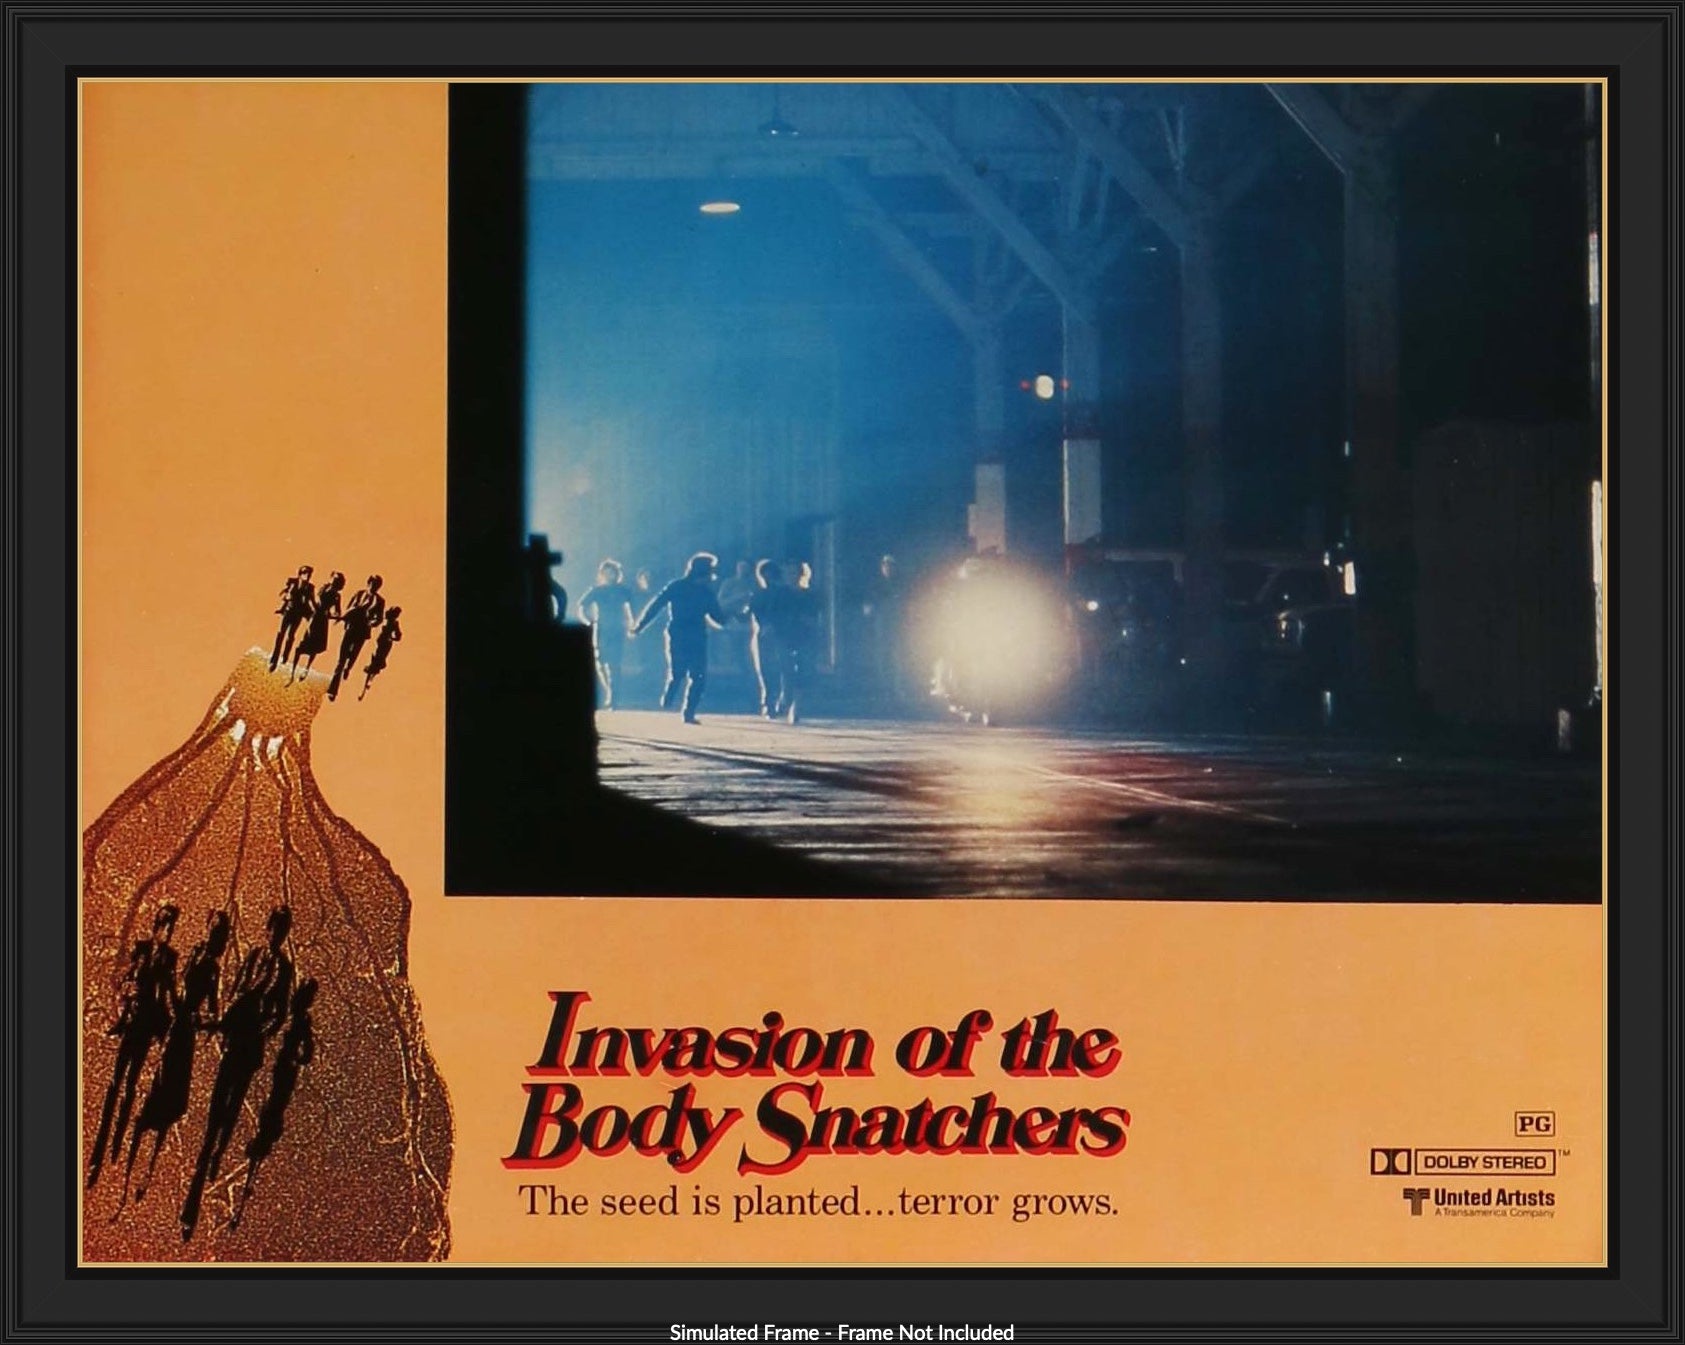 Invasion of the Body Snatchers (1978) original movie poster for sale at Original Film Art